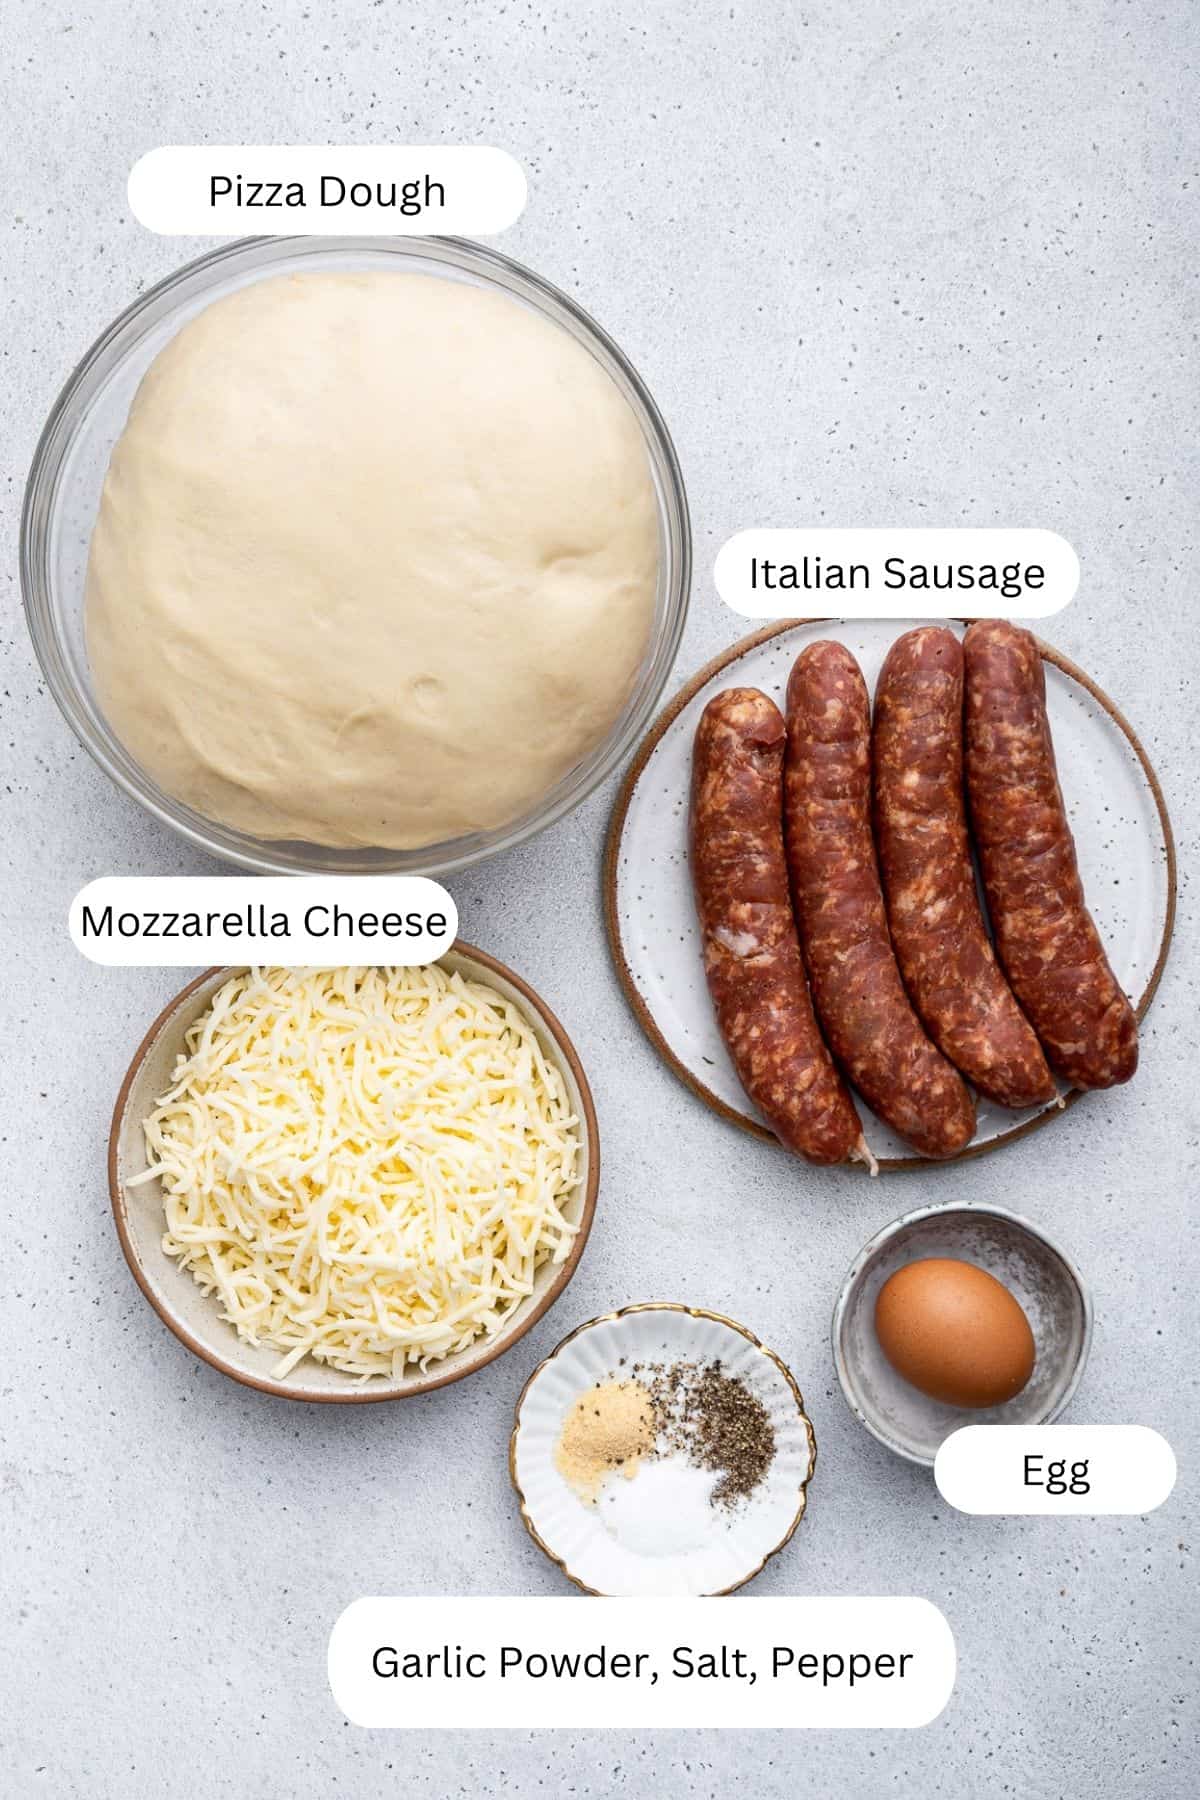 Ingredients for making sausage bread.